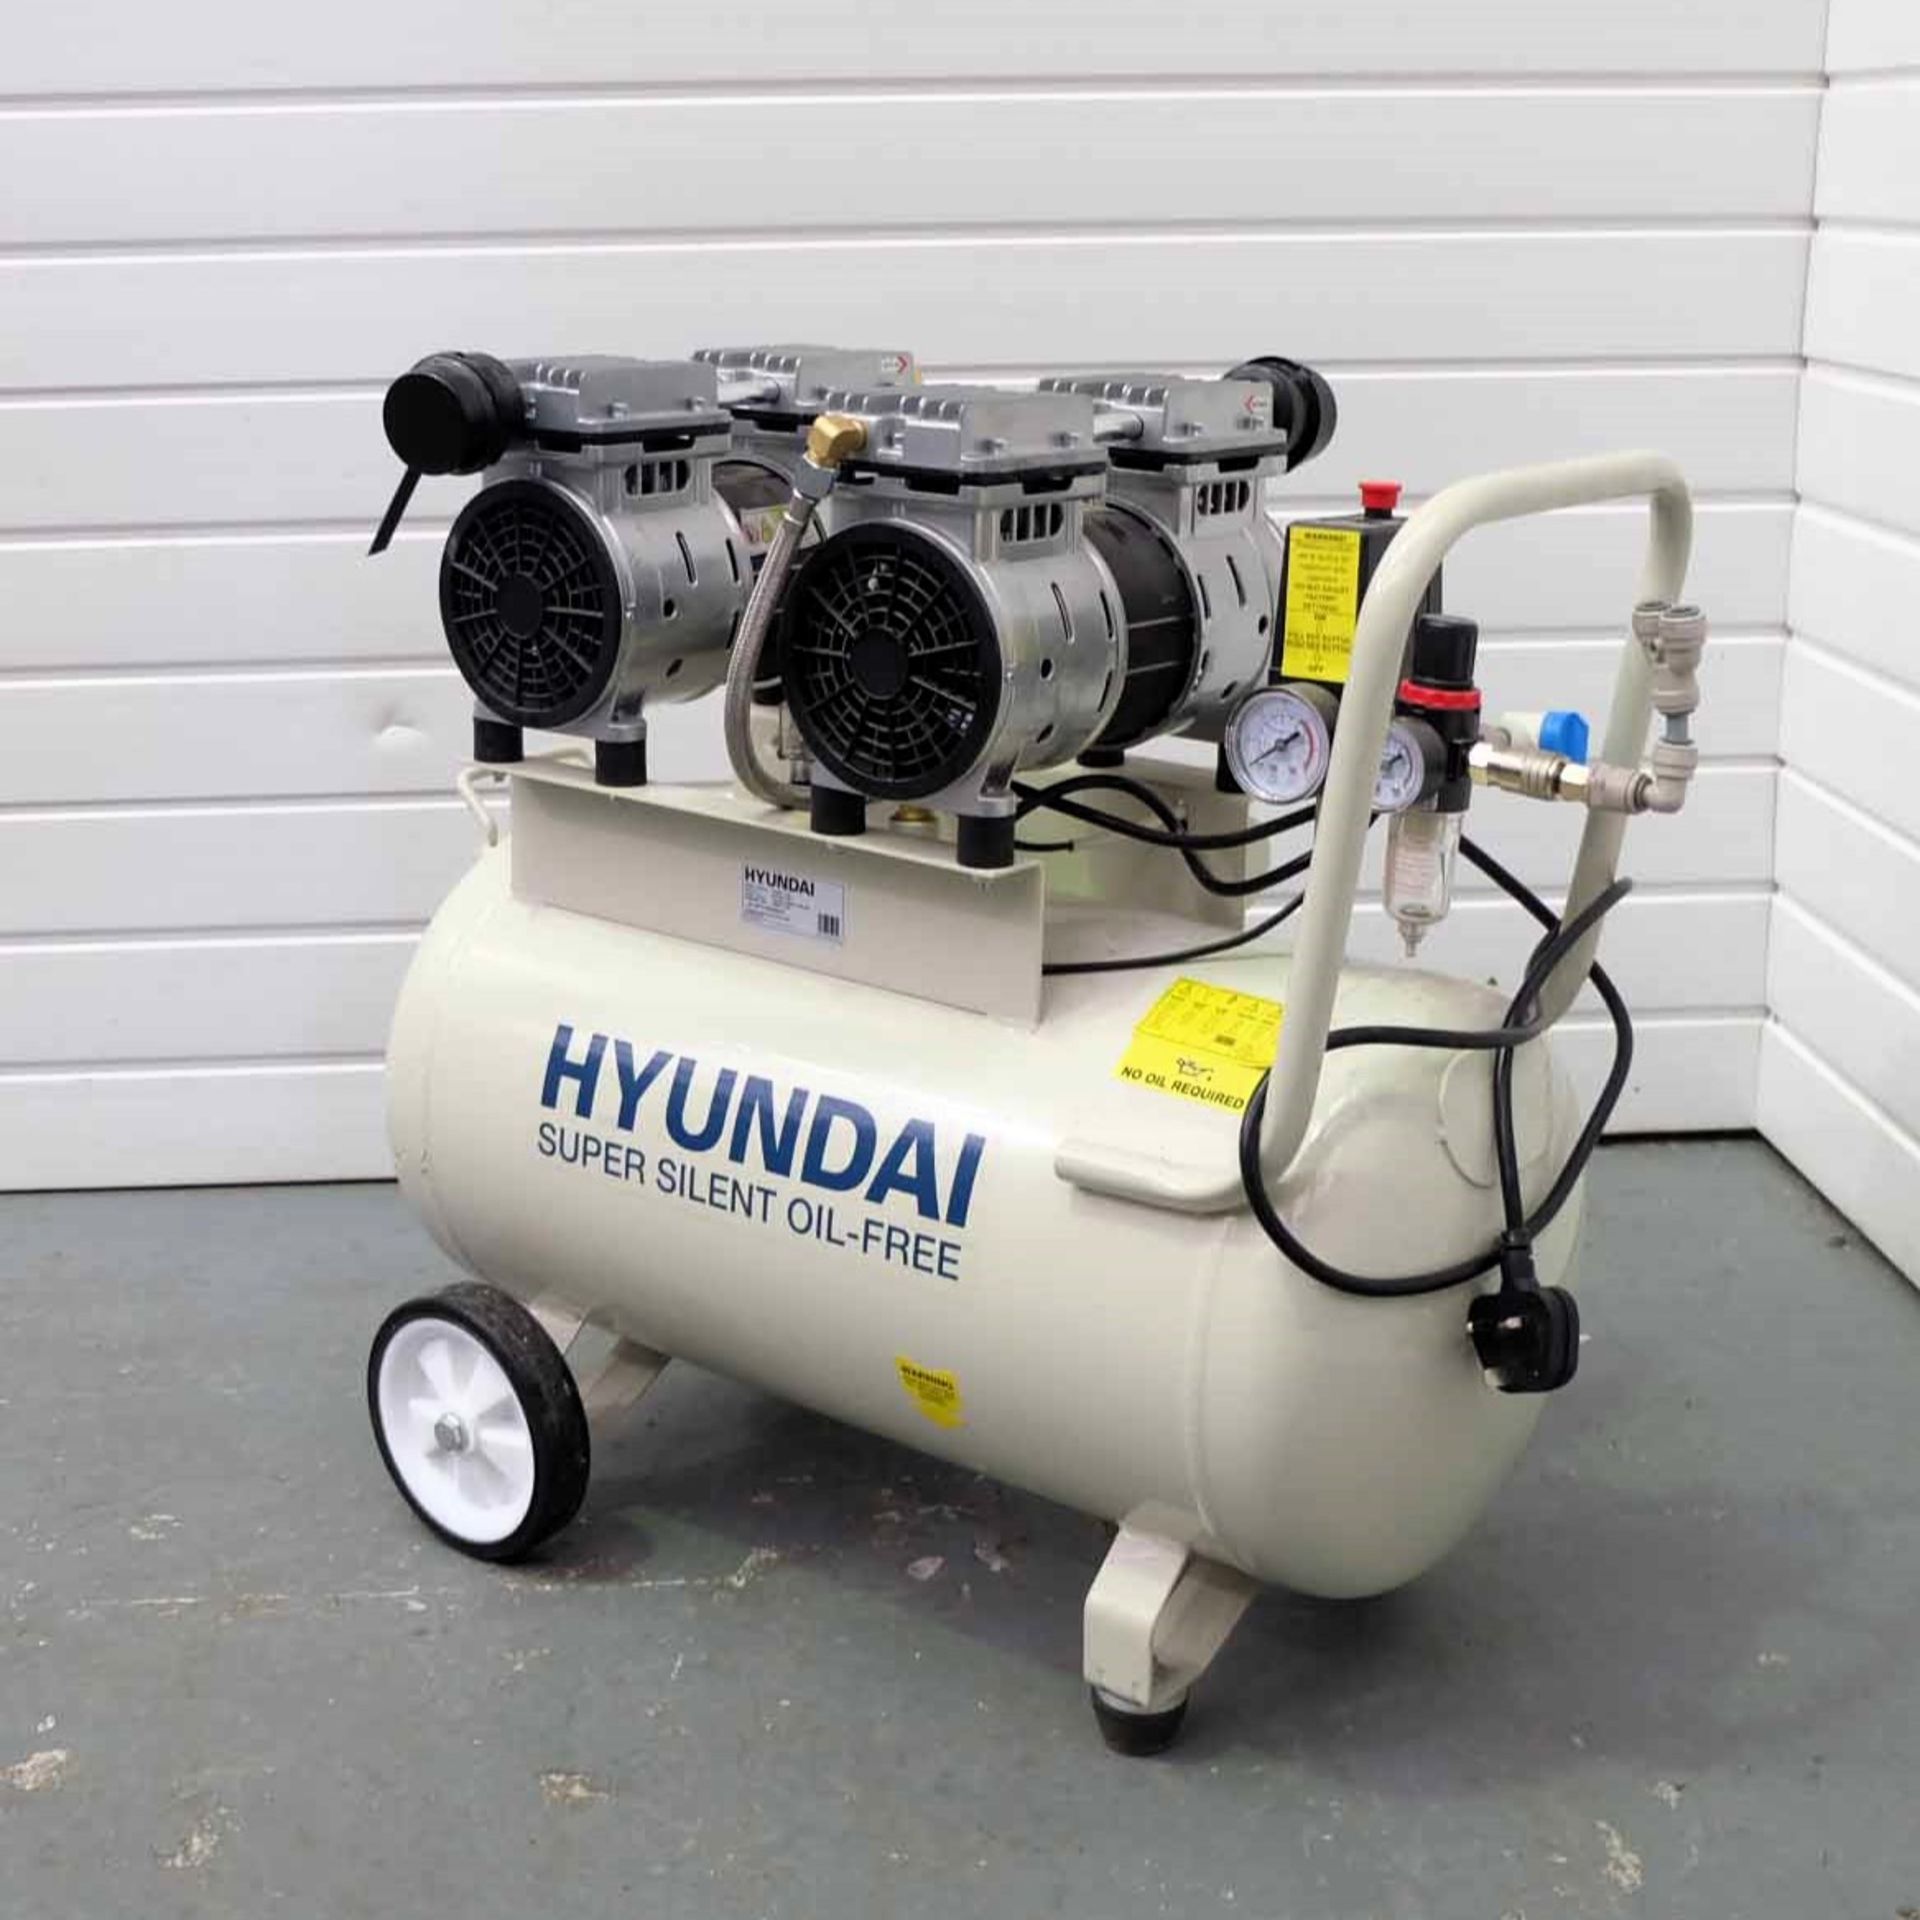 Hyundai Super Silent Oil Free Compressor. Model No HY27550. Tank Capacity 50 Litres. Pressure 7 Bar.